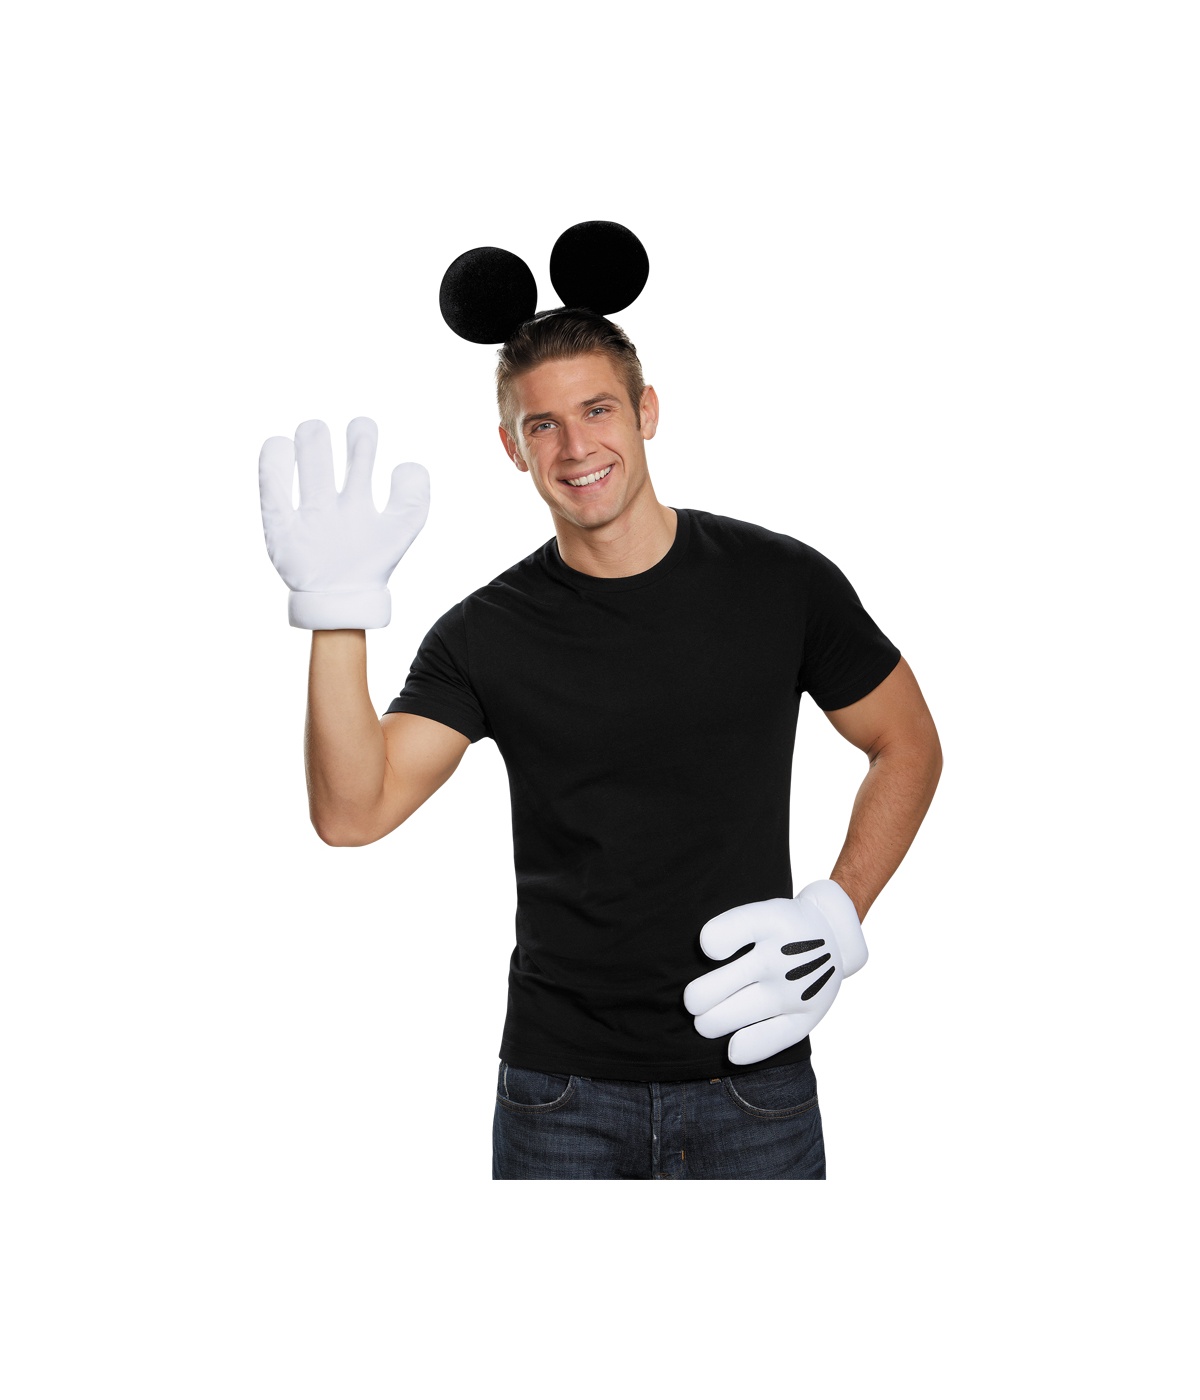  Mickey Mouse Ears Glove Set